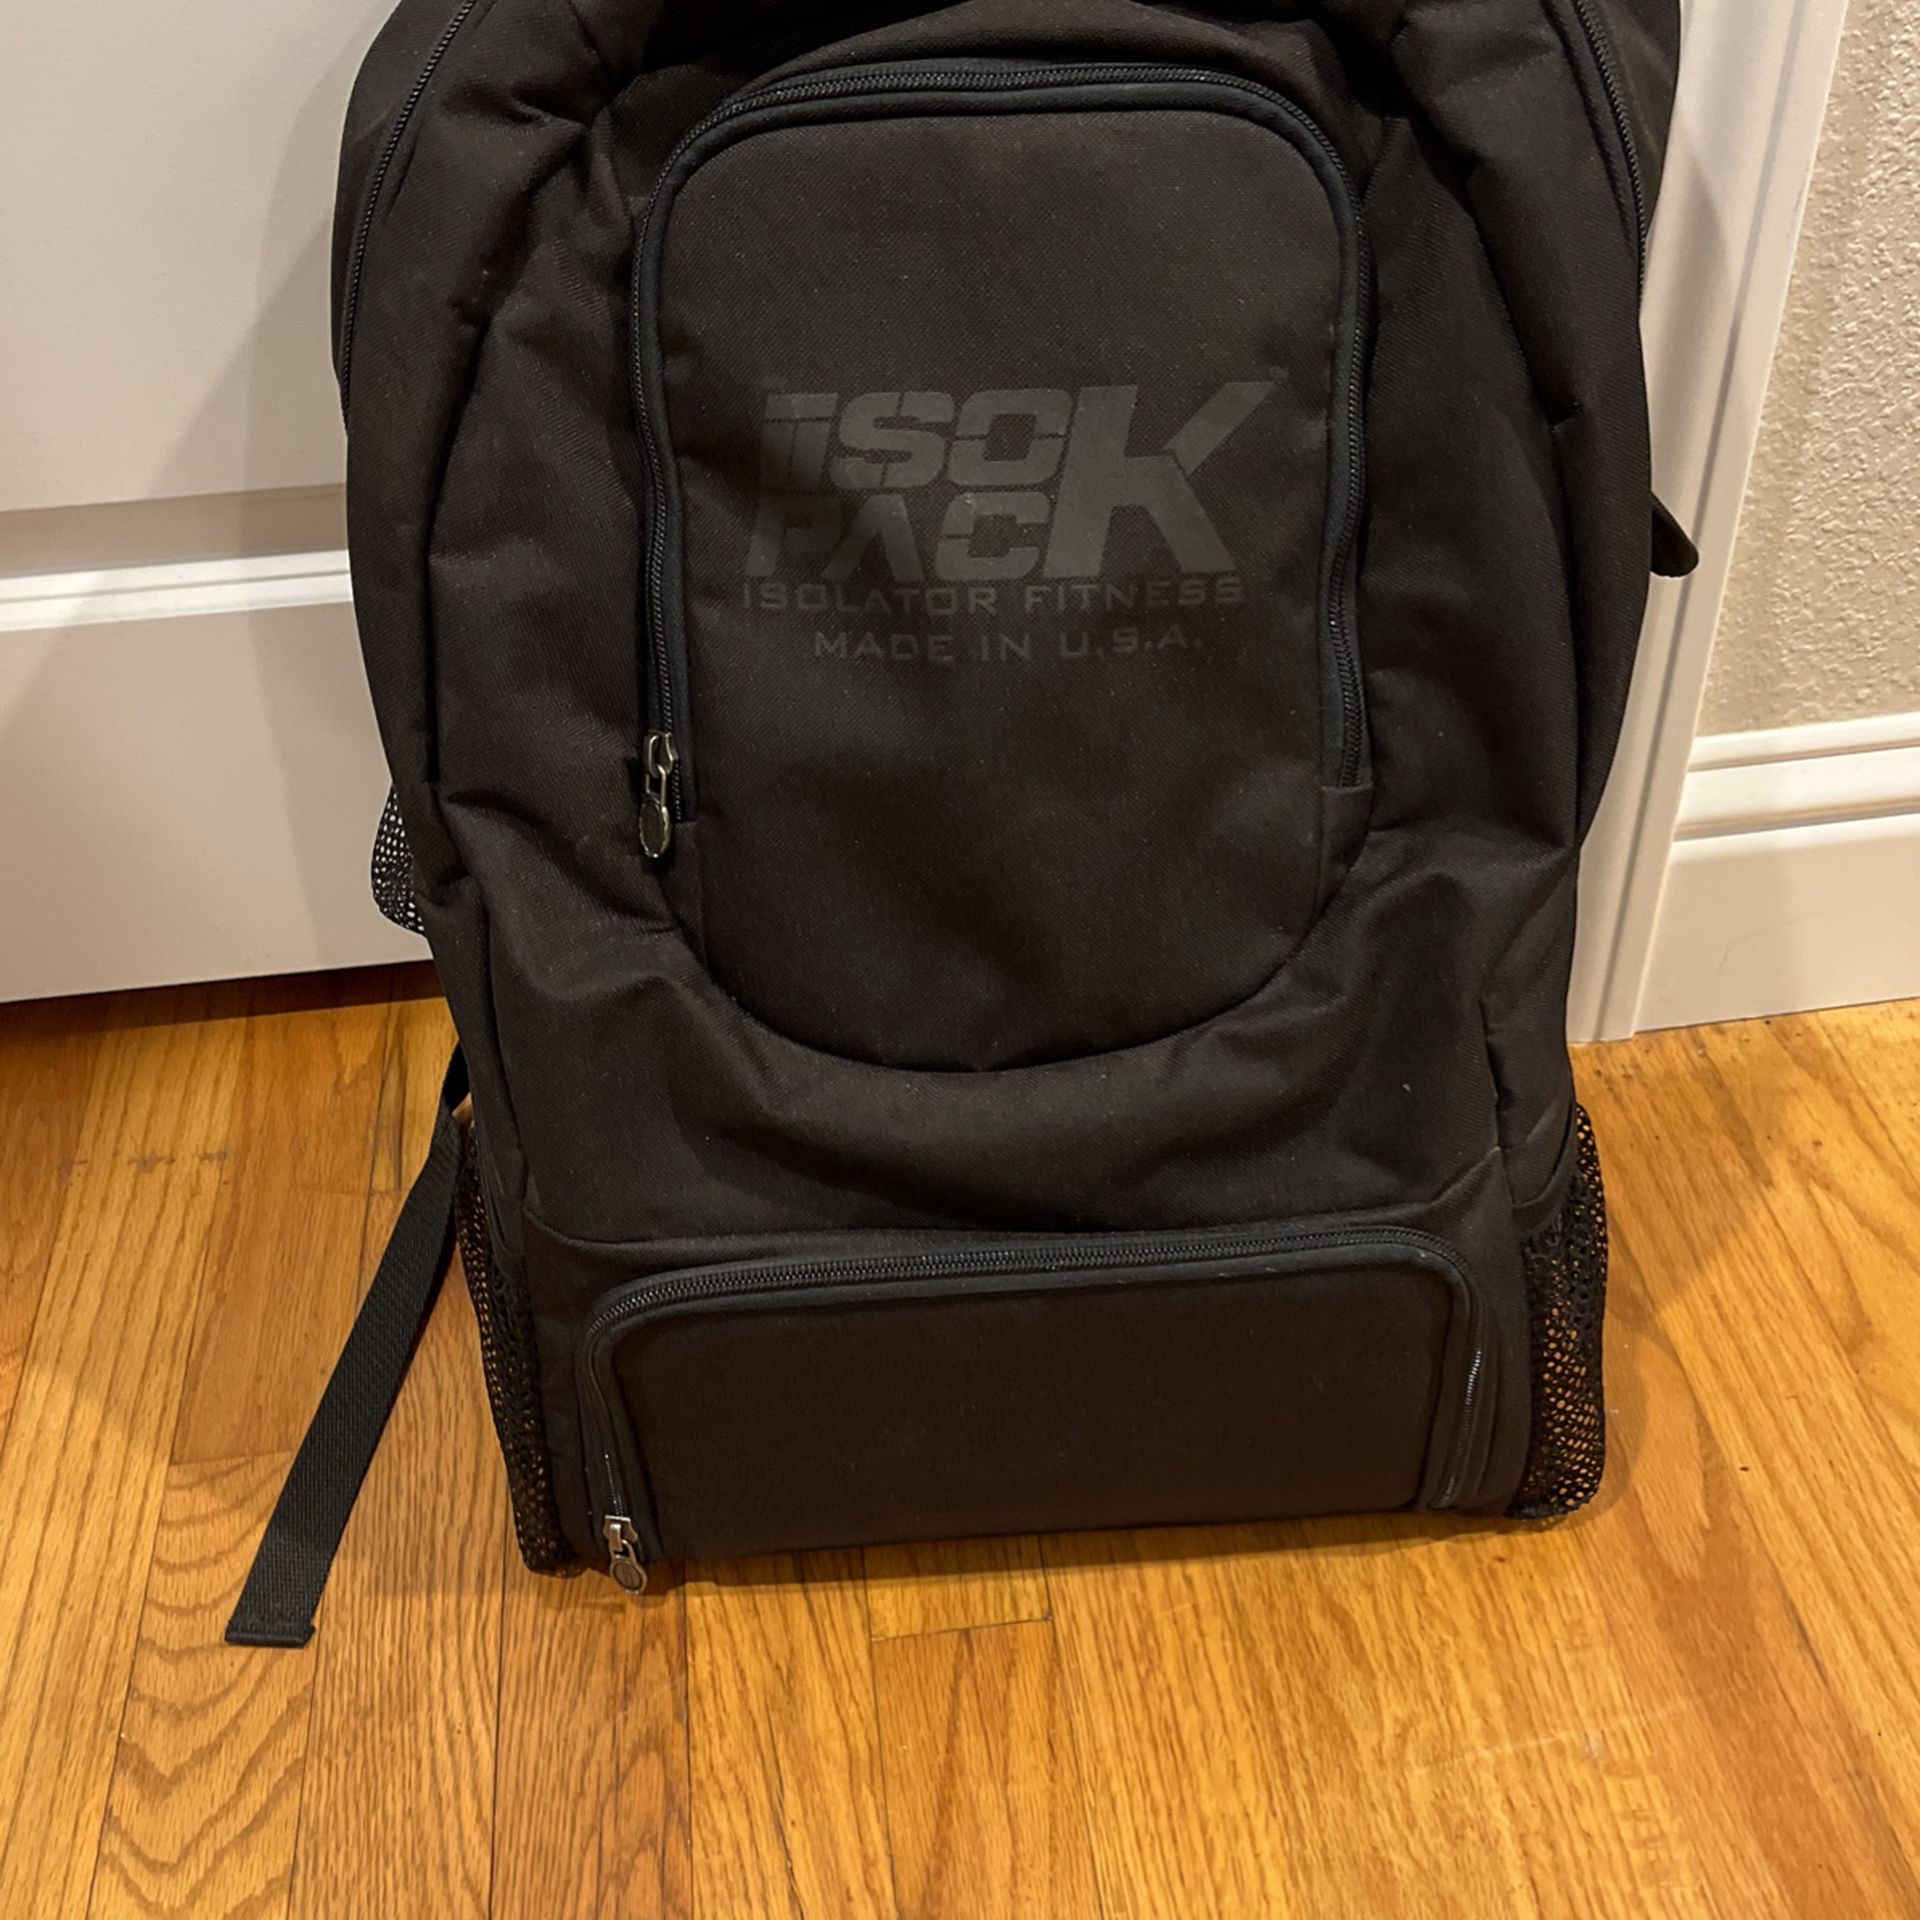 ISOPACK Backpack 